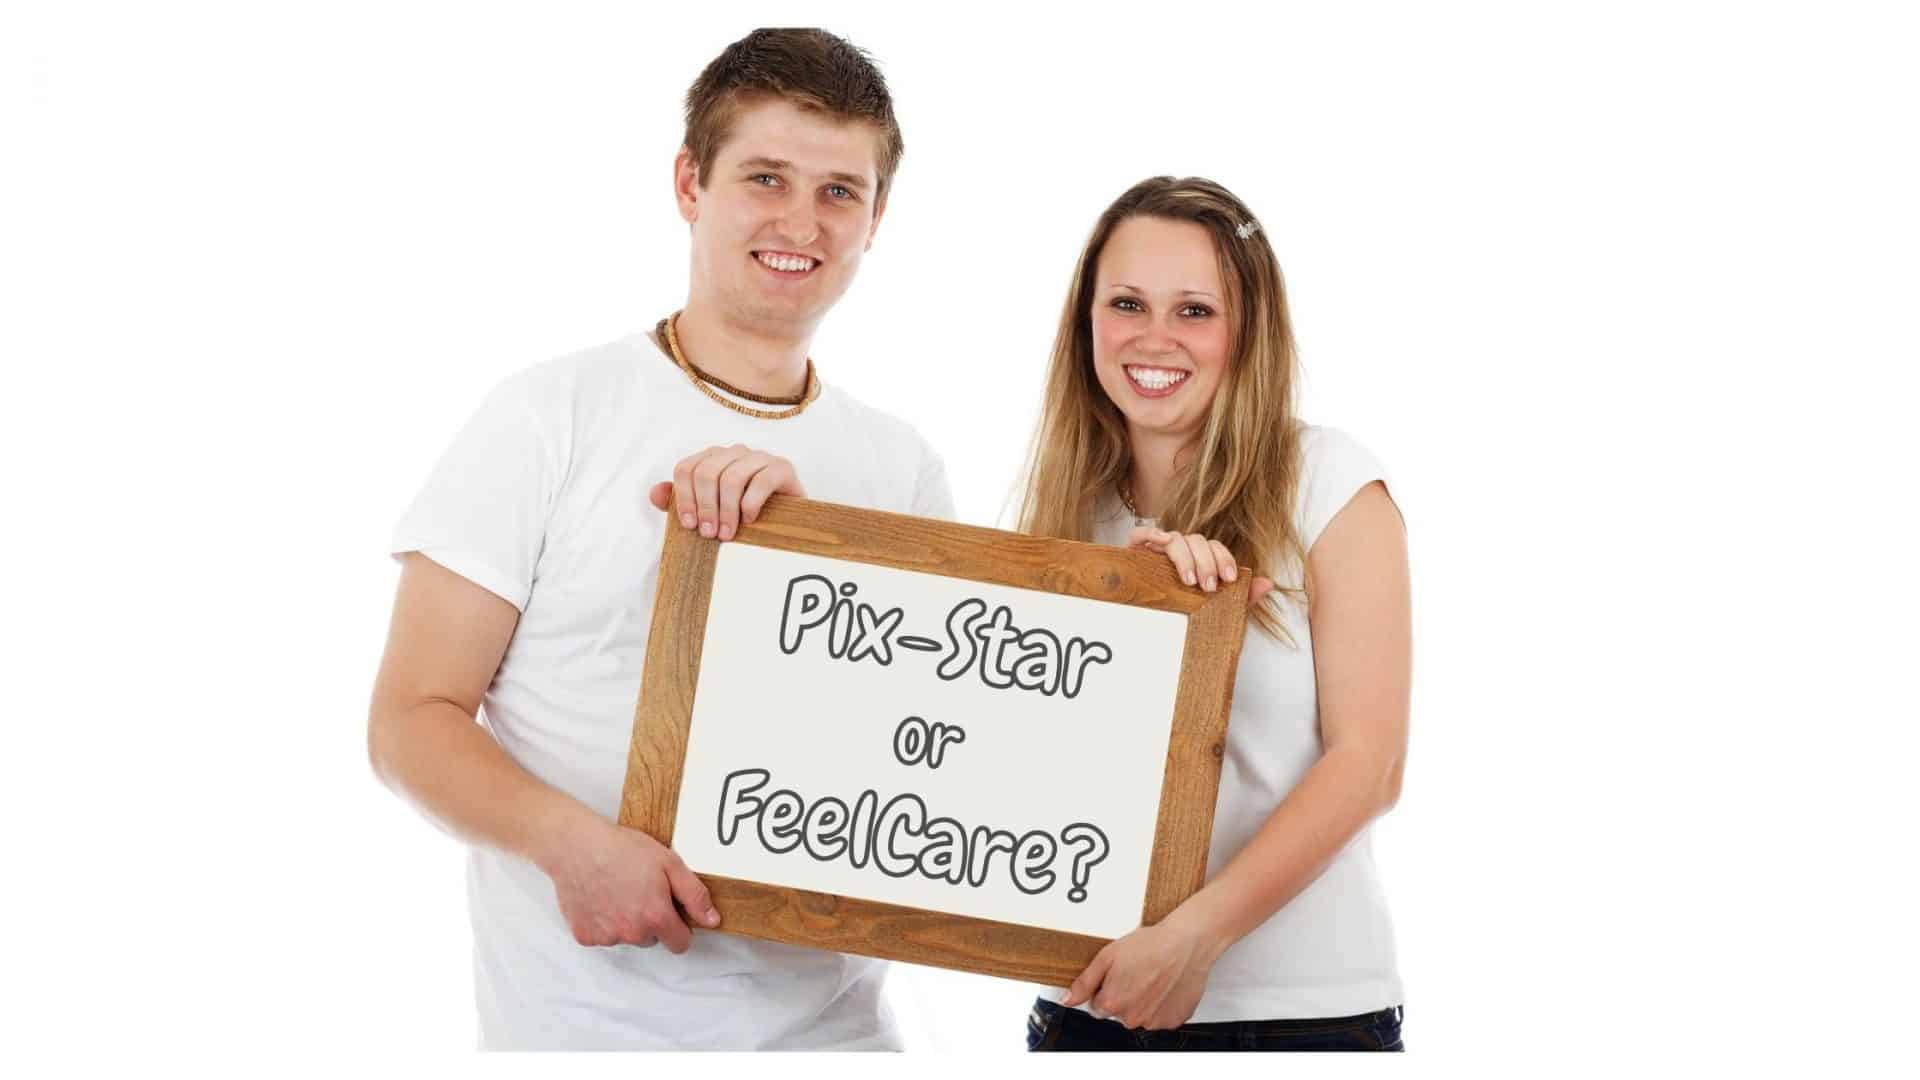 Molduras Pix-Star vs FeelCare